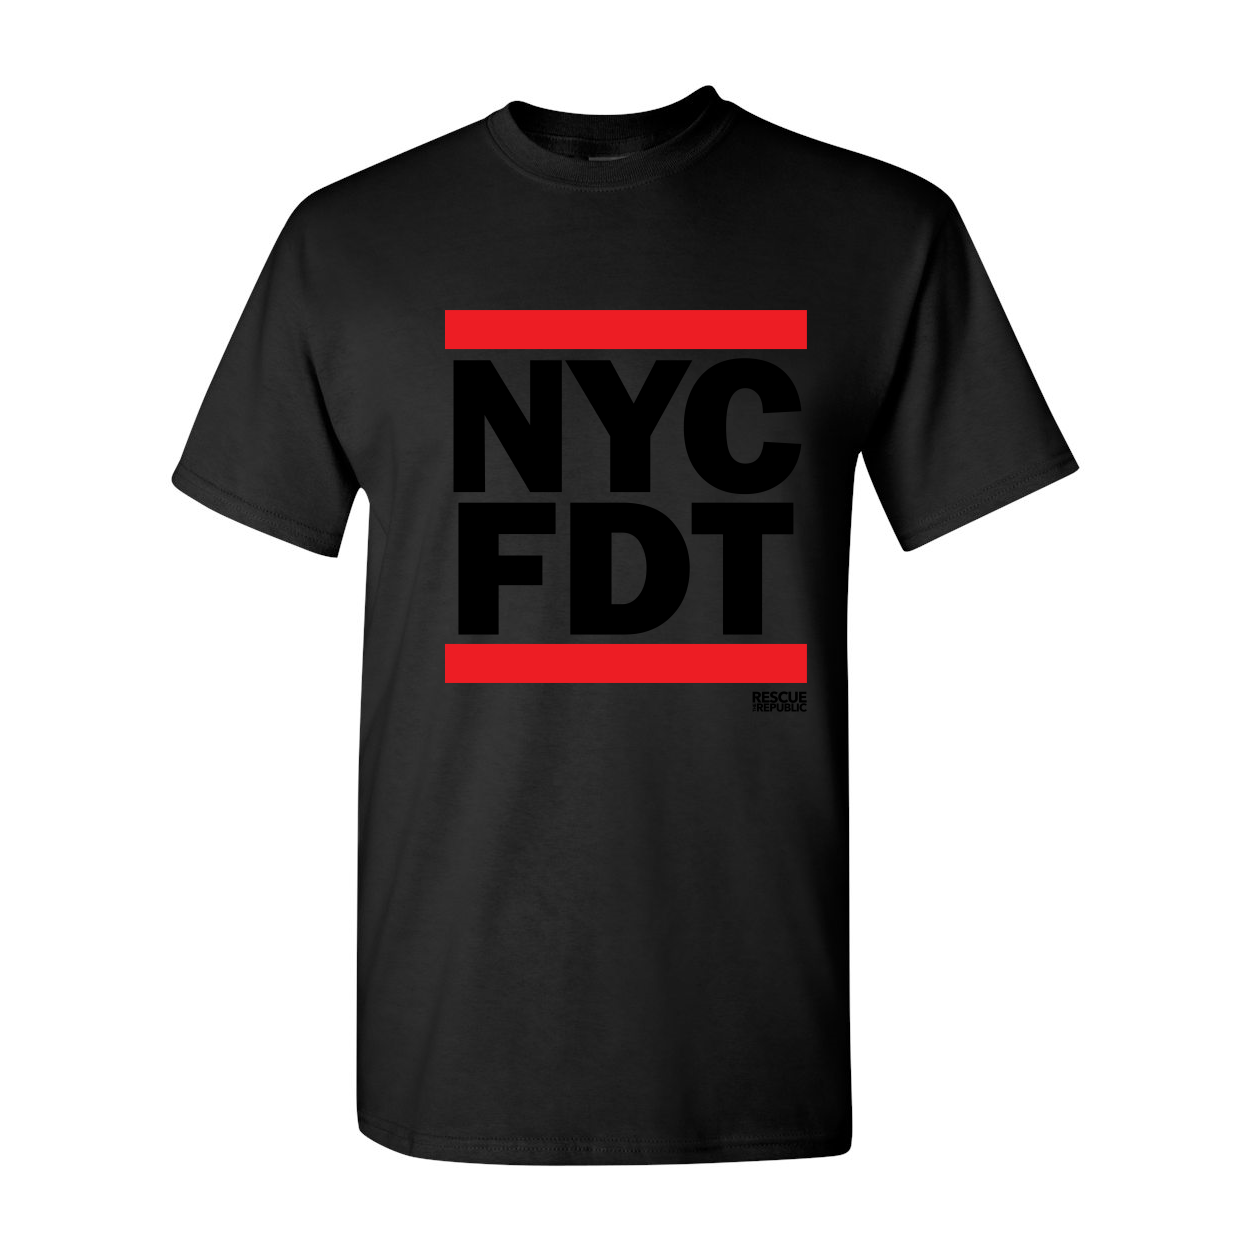 NYC FDT T-Shirt